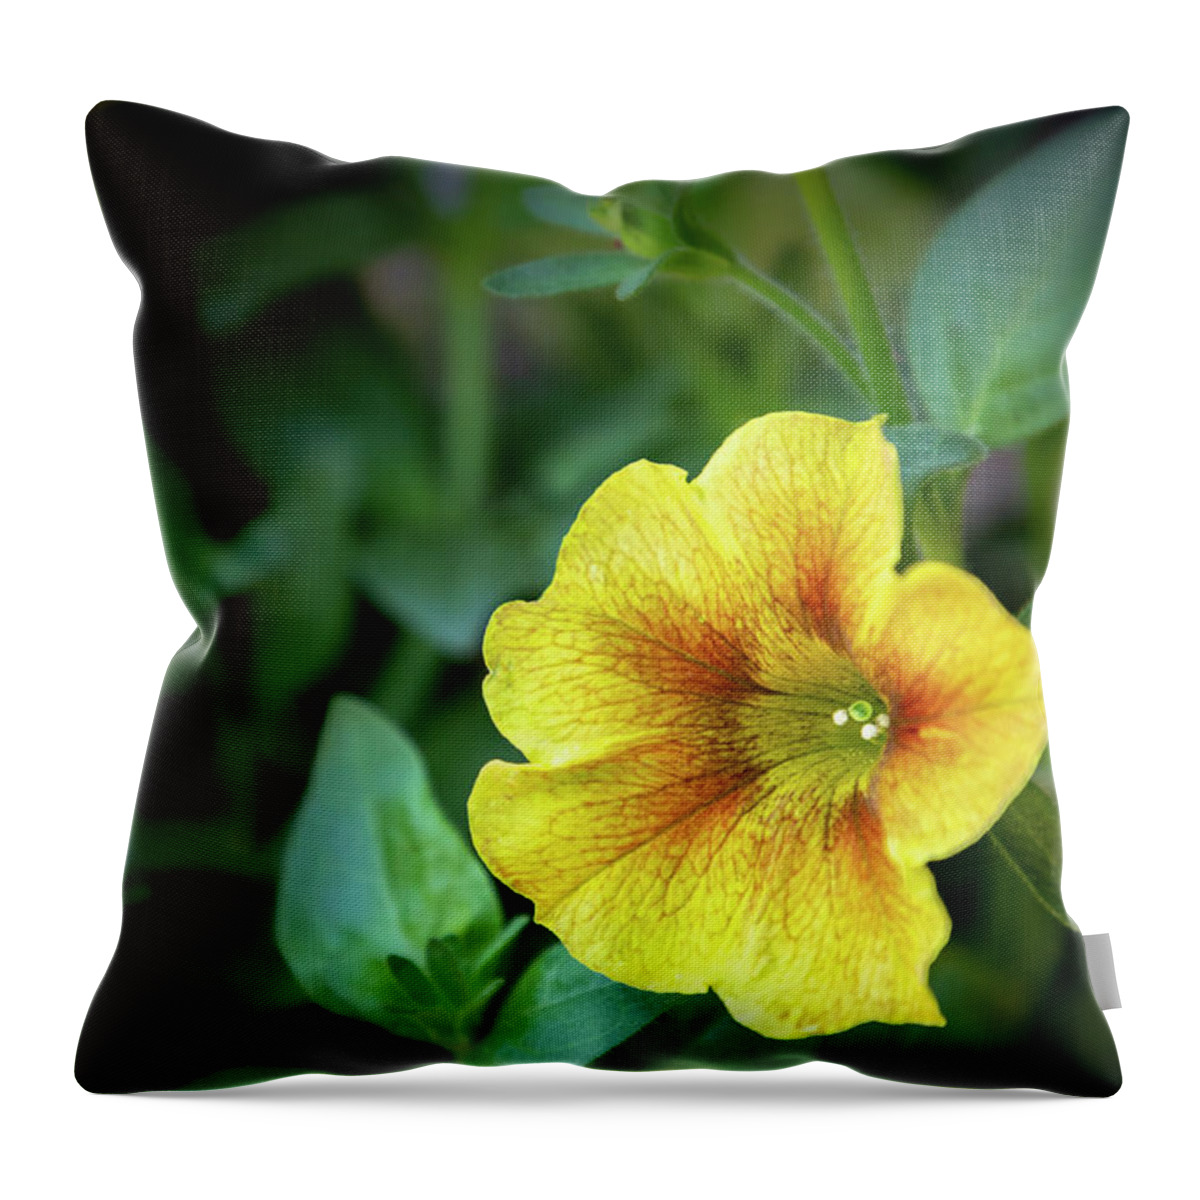 Flower Throw Pillow featuring the photograph Caramel Yellow Petunia by Robert Carter